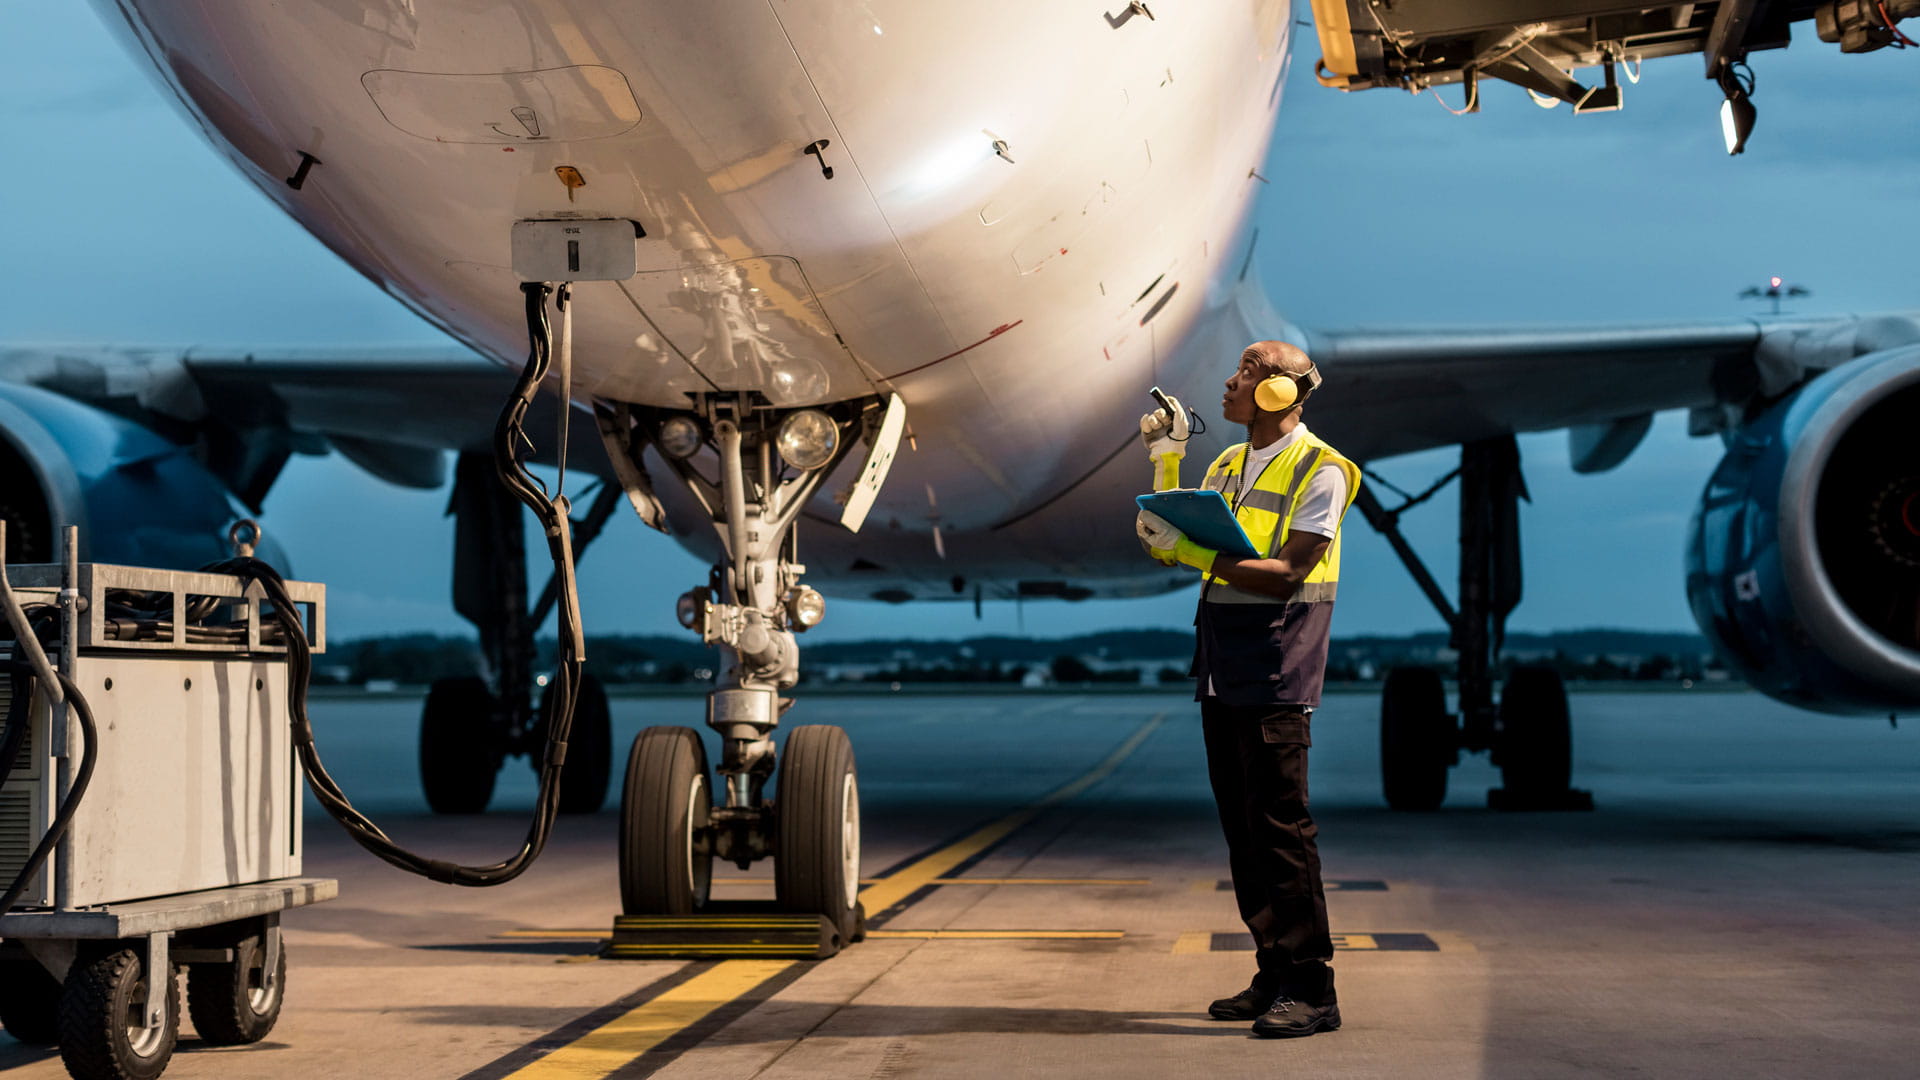 Airport crew inspecting plane